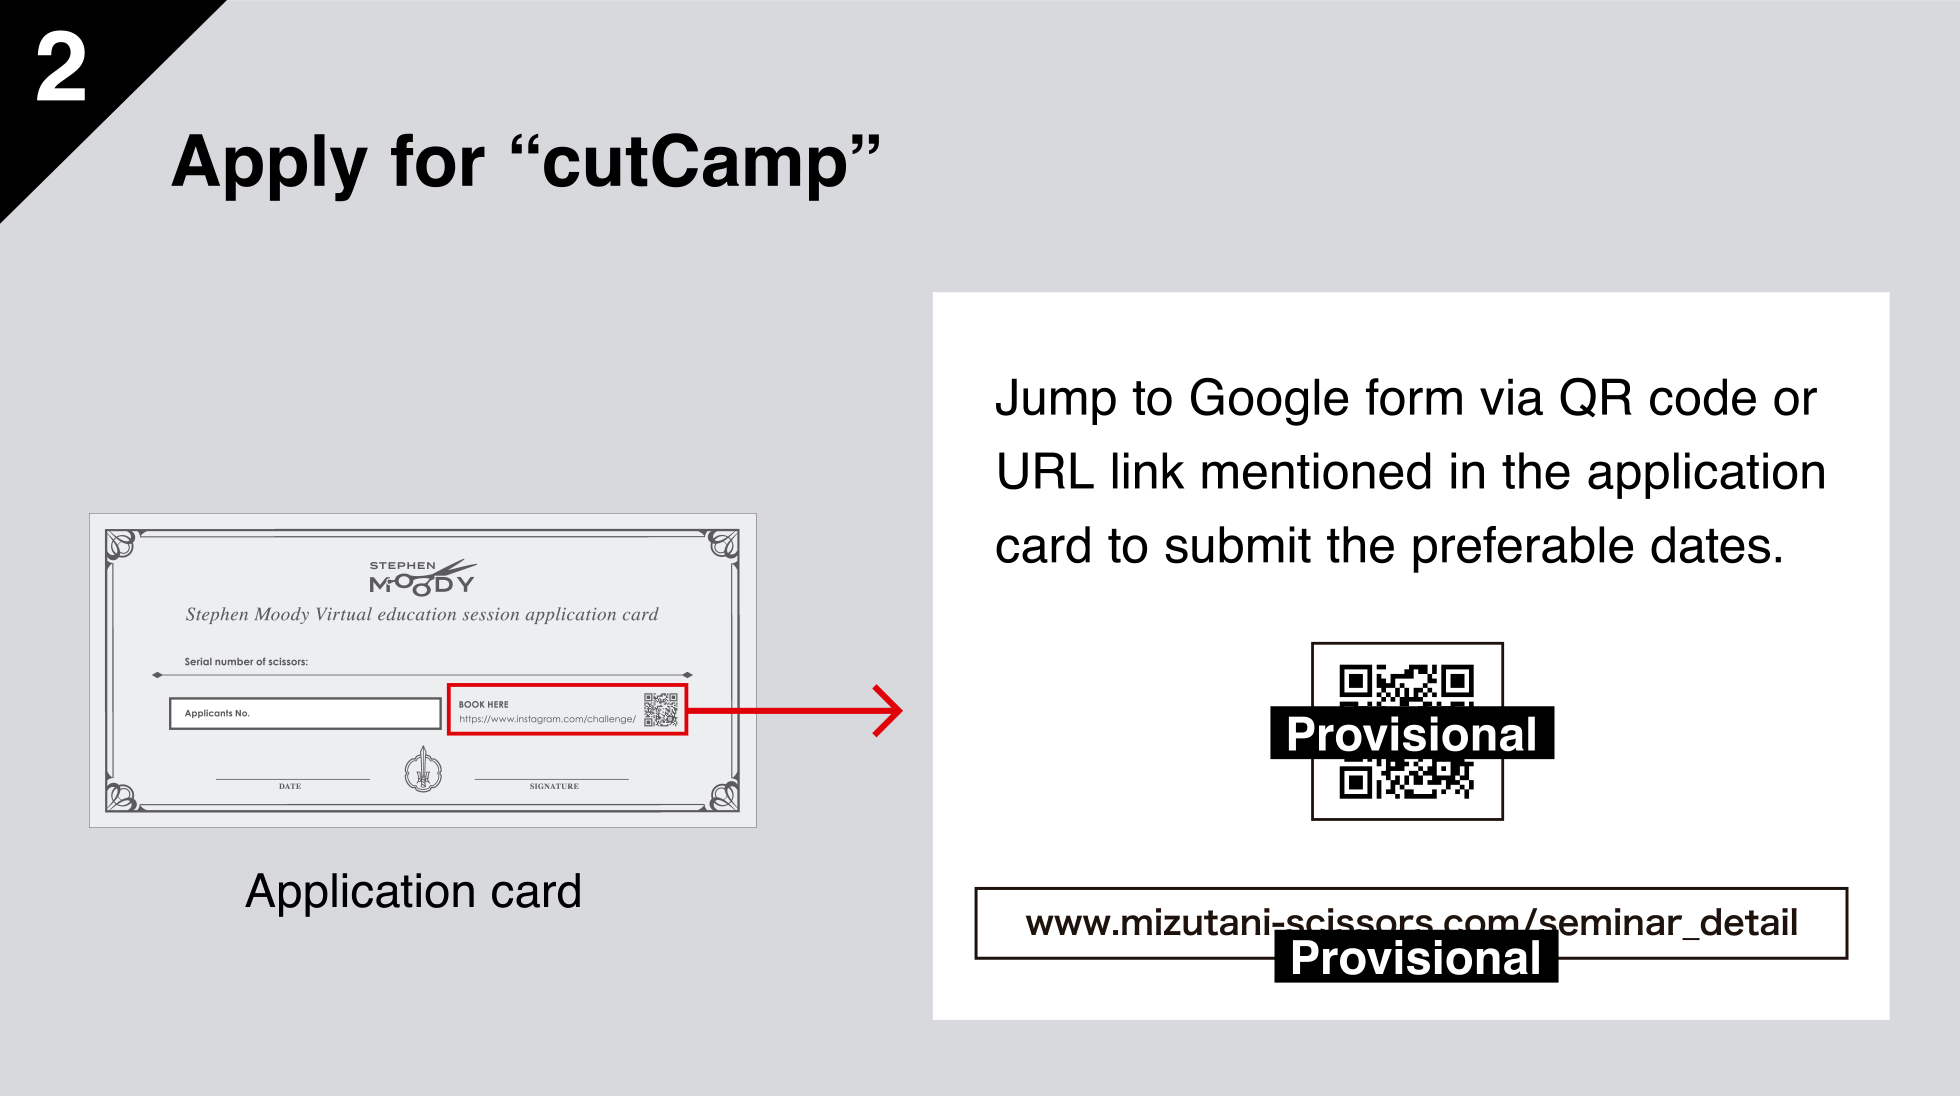 2. Apply for cutCamp